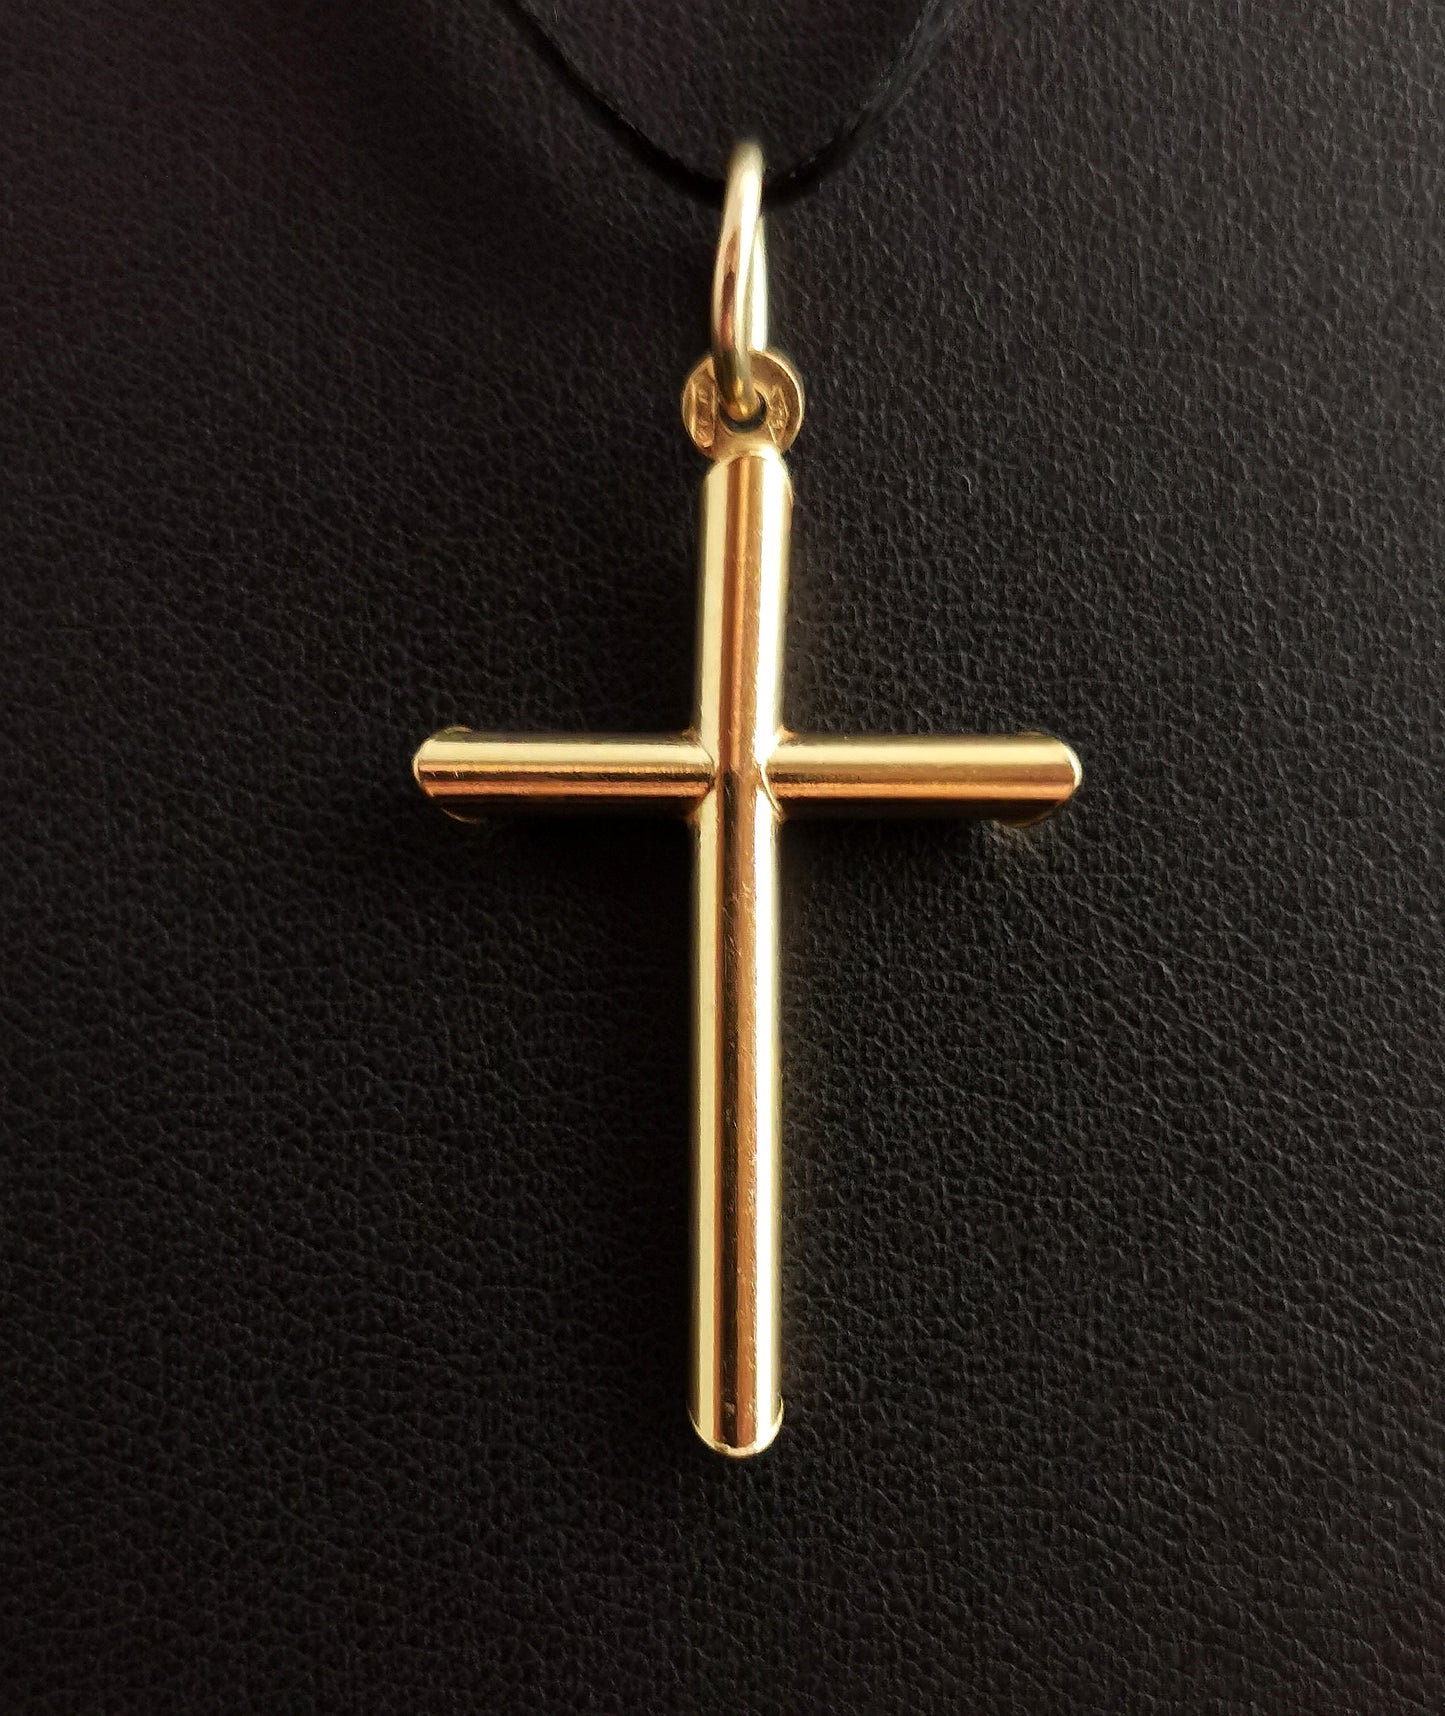 Vintage 9ct yellow gold Cross pendant